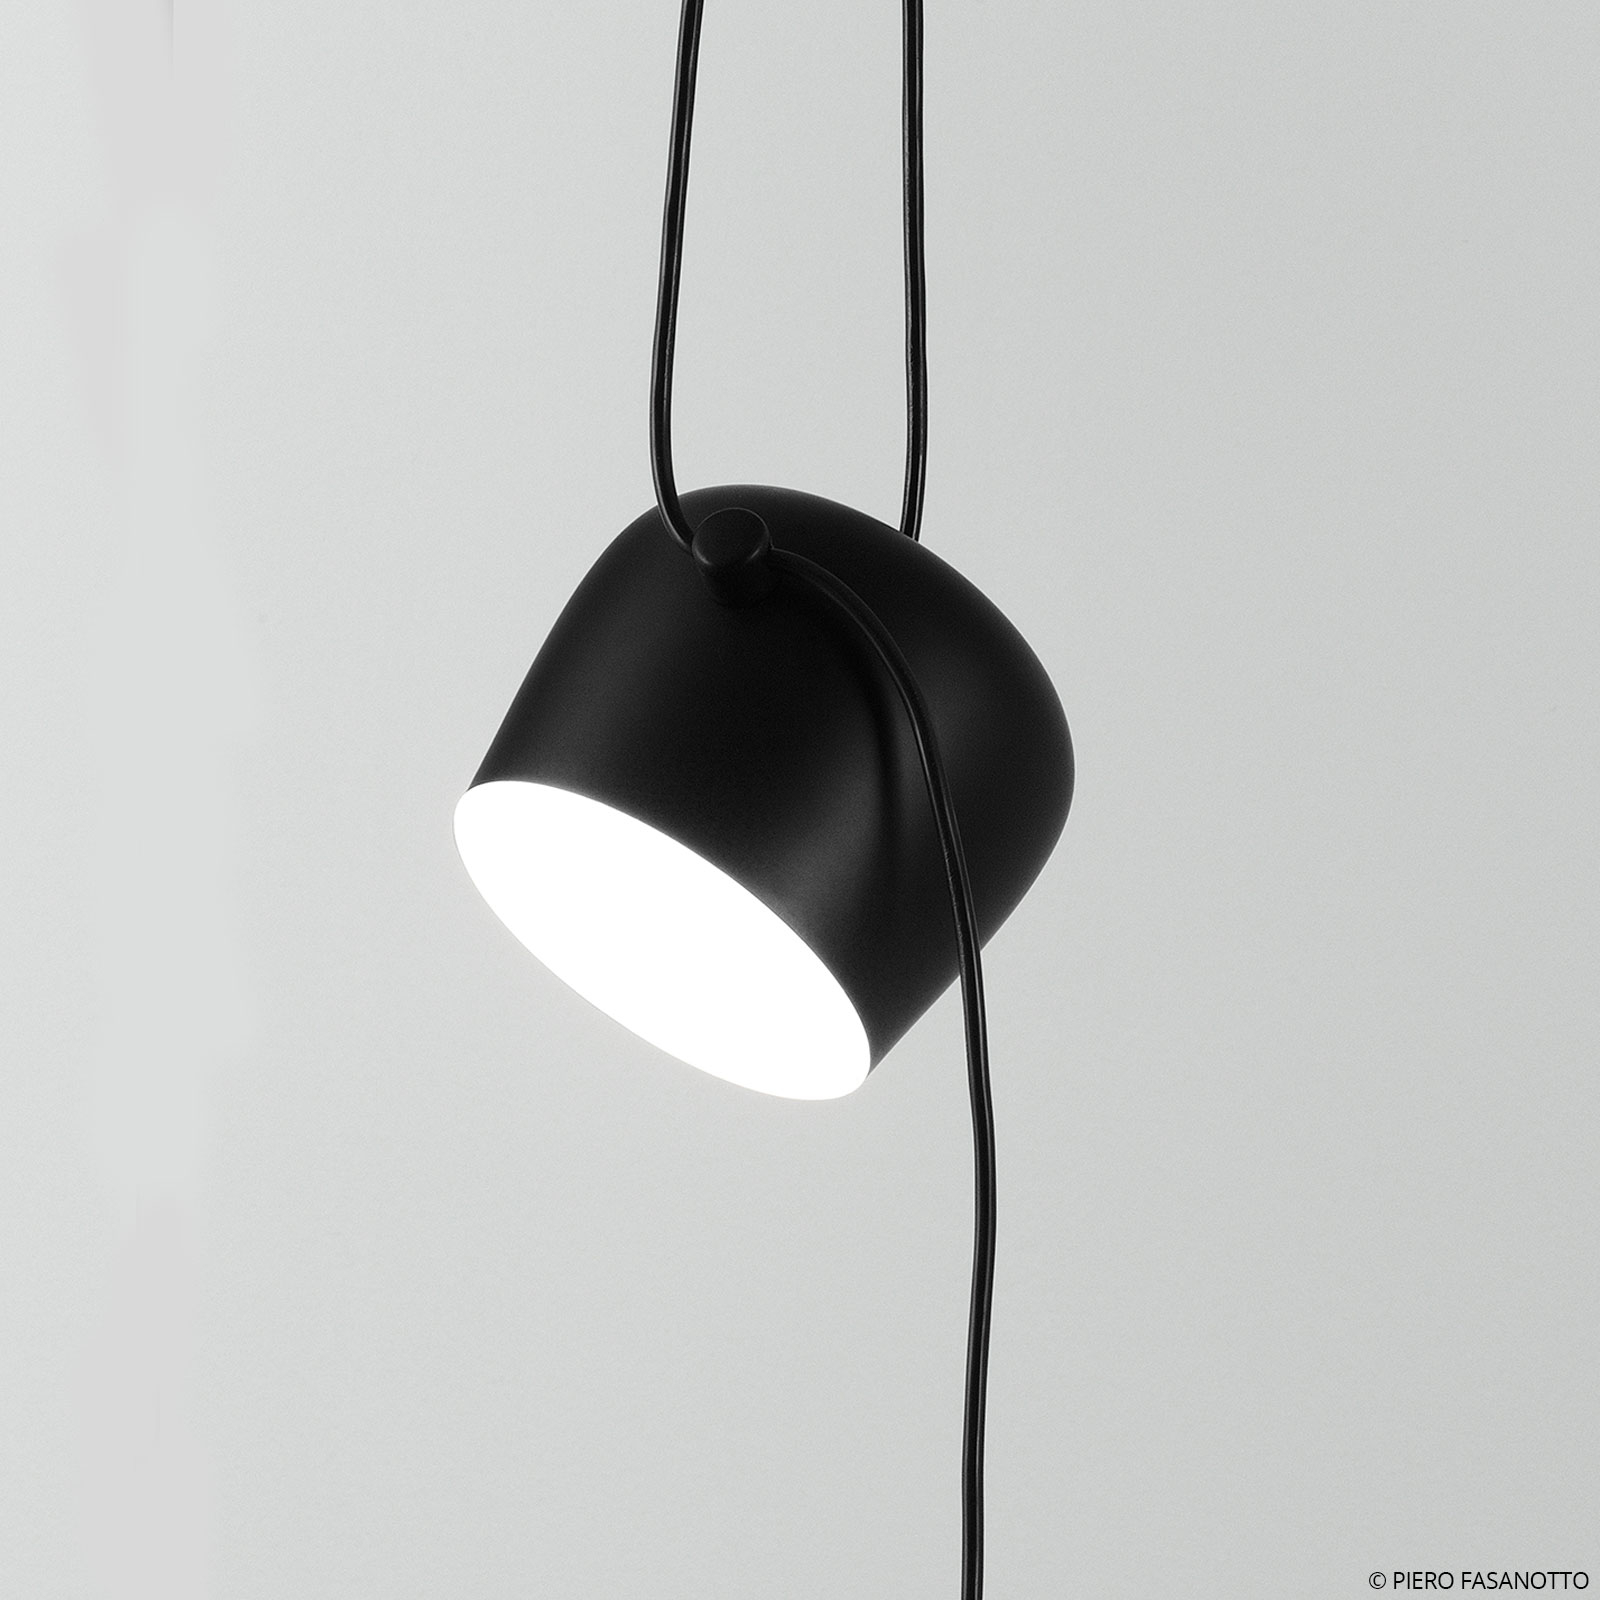 FLOS Aim Small lampa wisząca LED, czarna